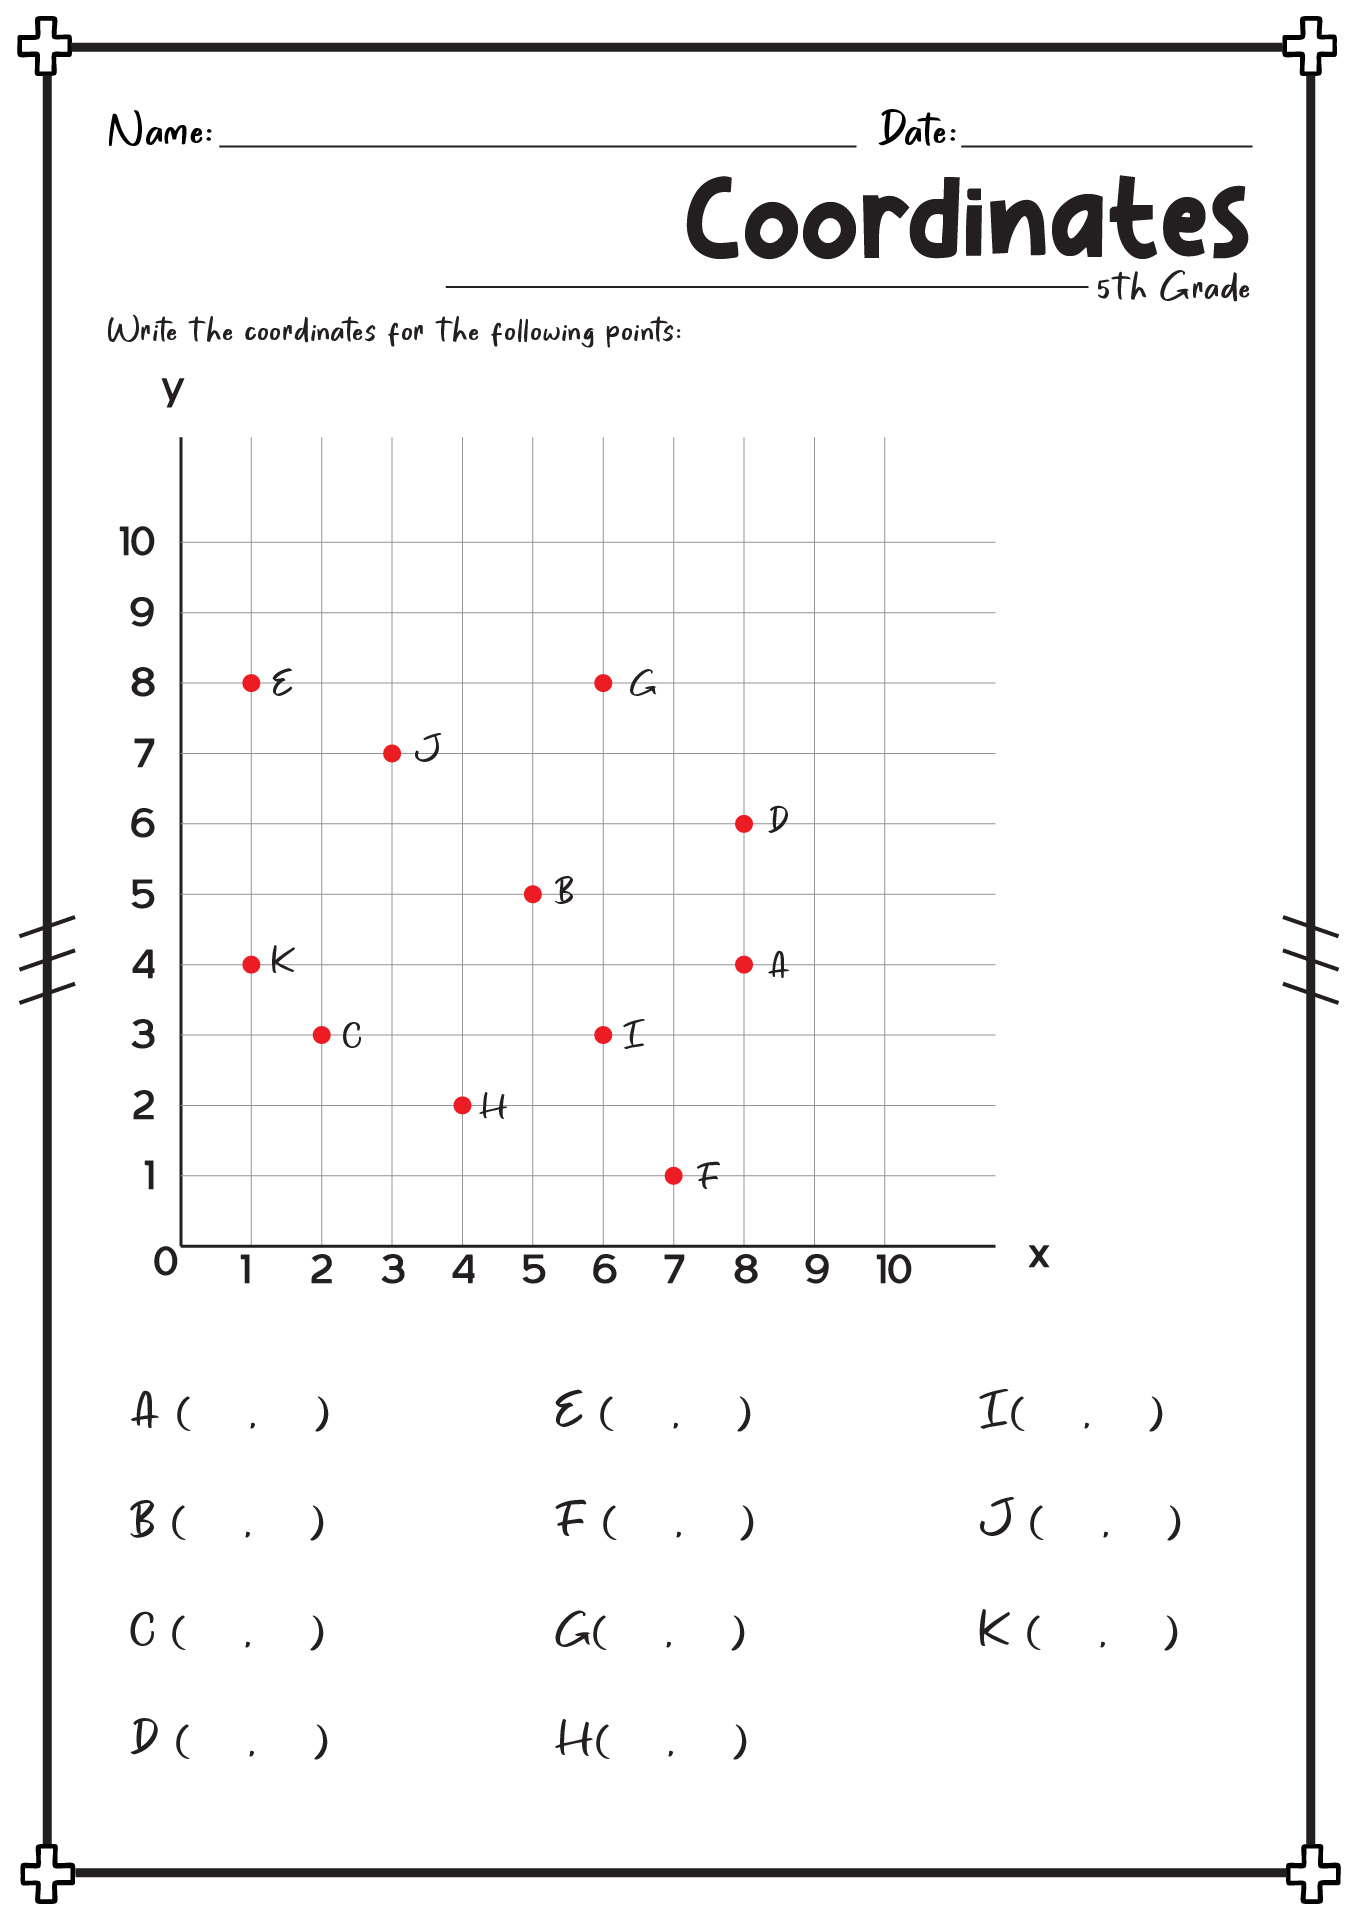 5th Grade Math Worksheet Coordinates Image